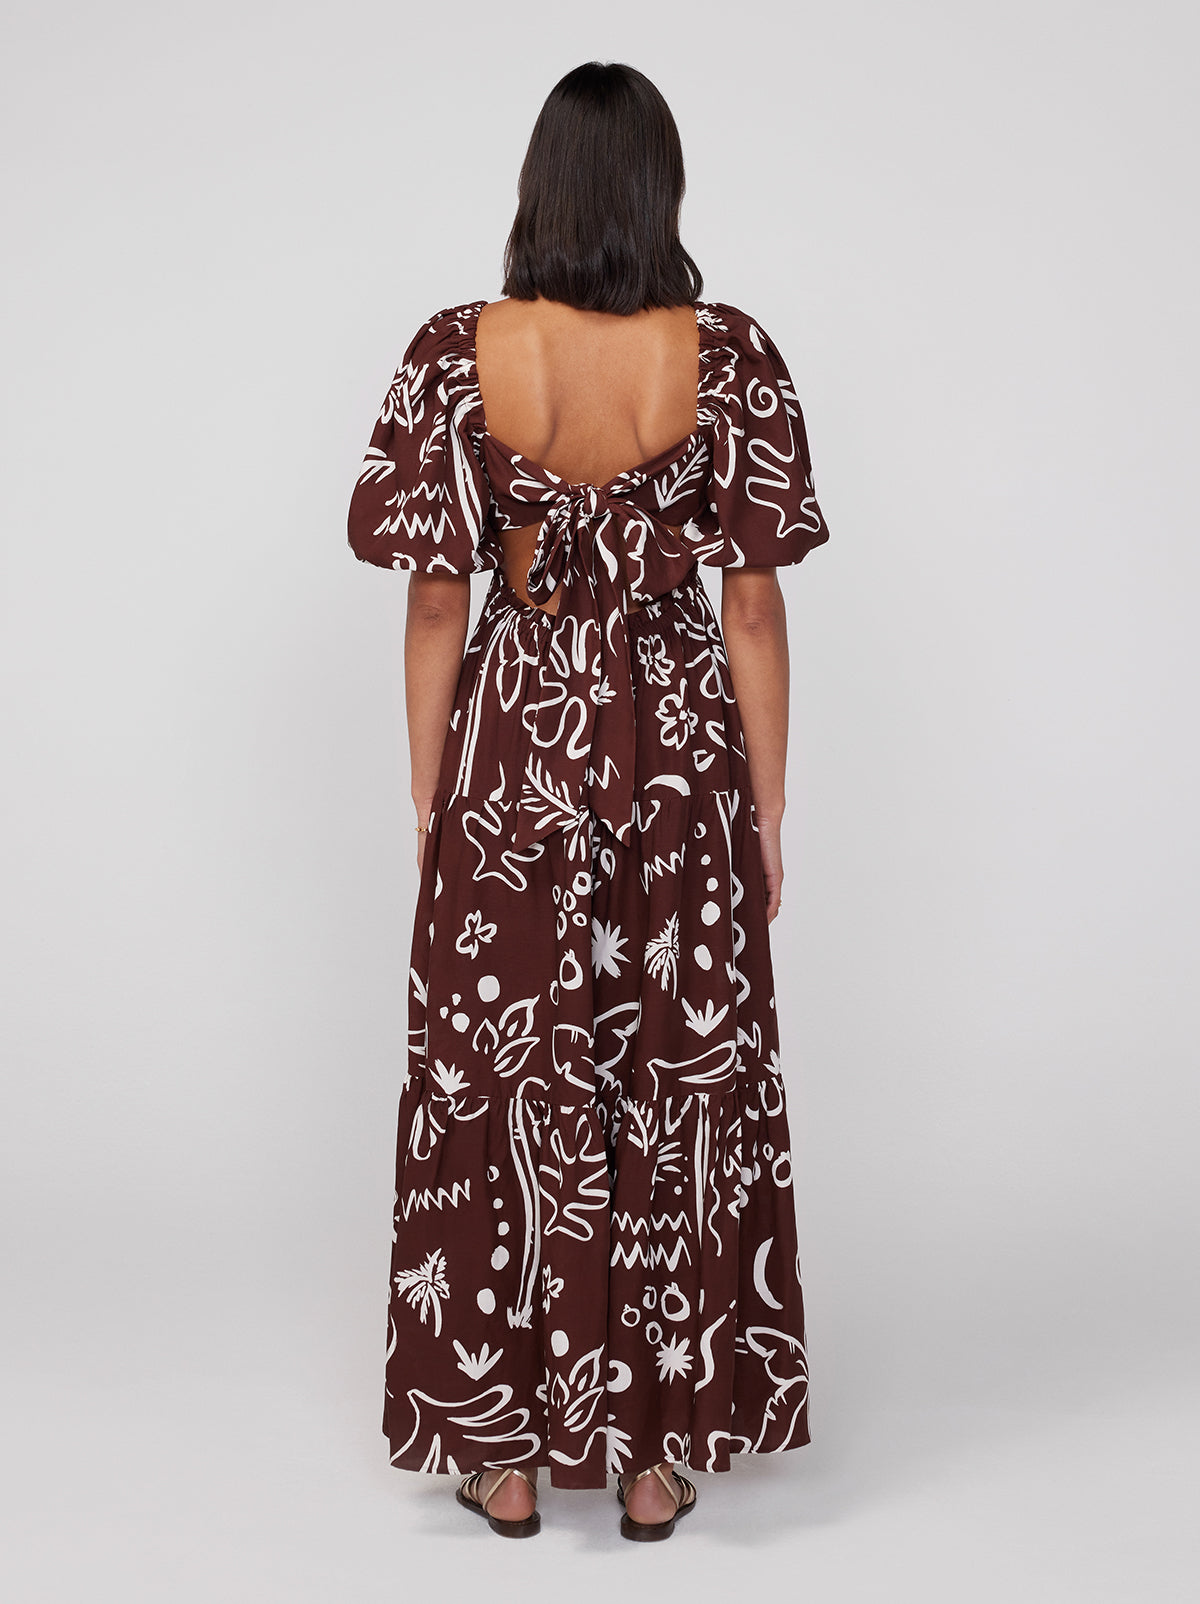 Gianna Coco Palm Print Maxi Dress